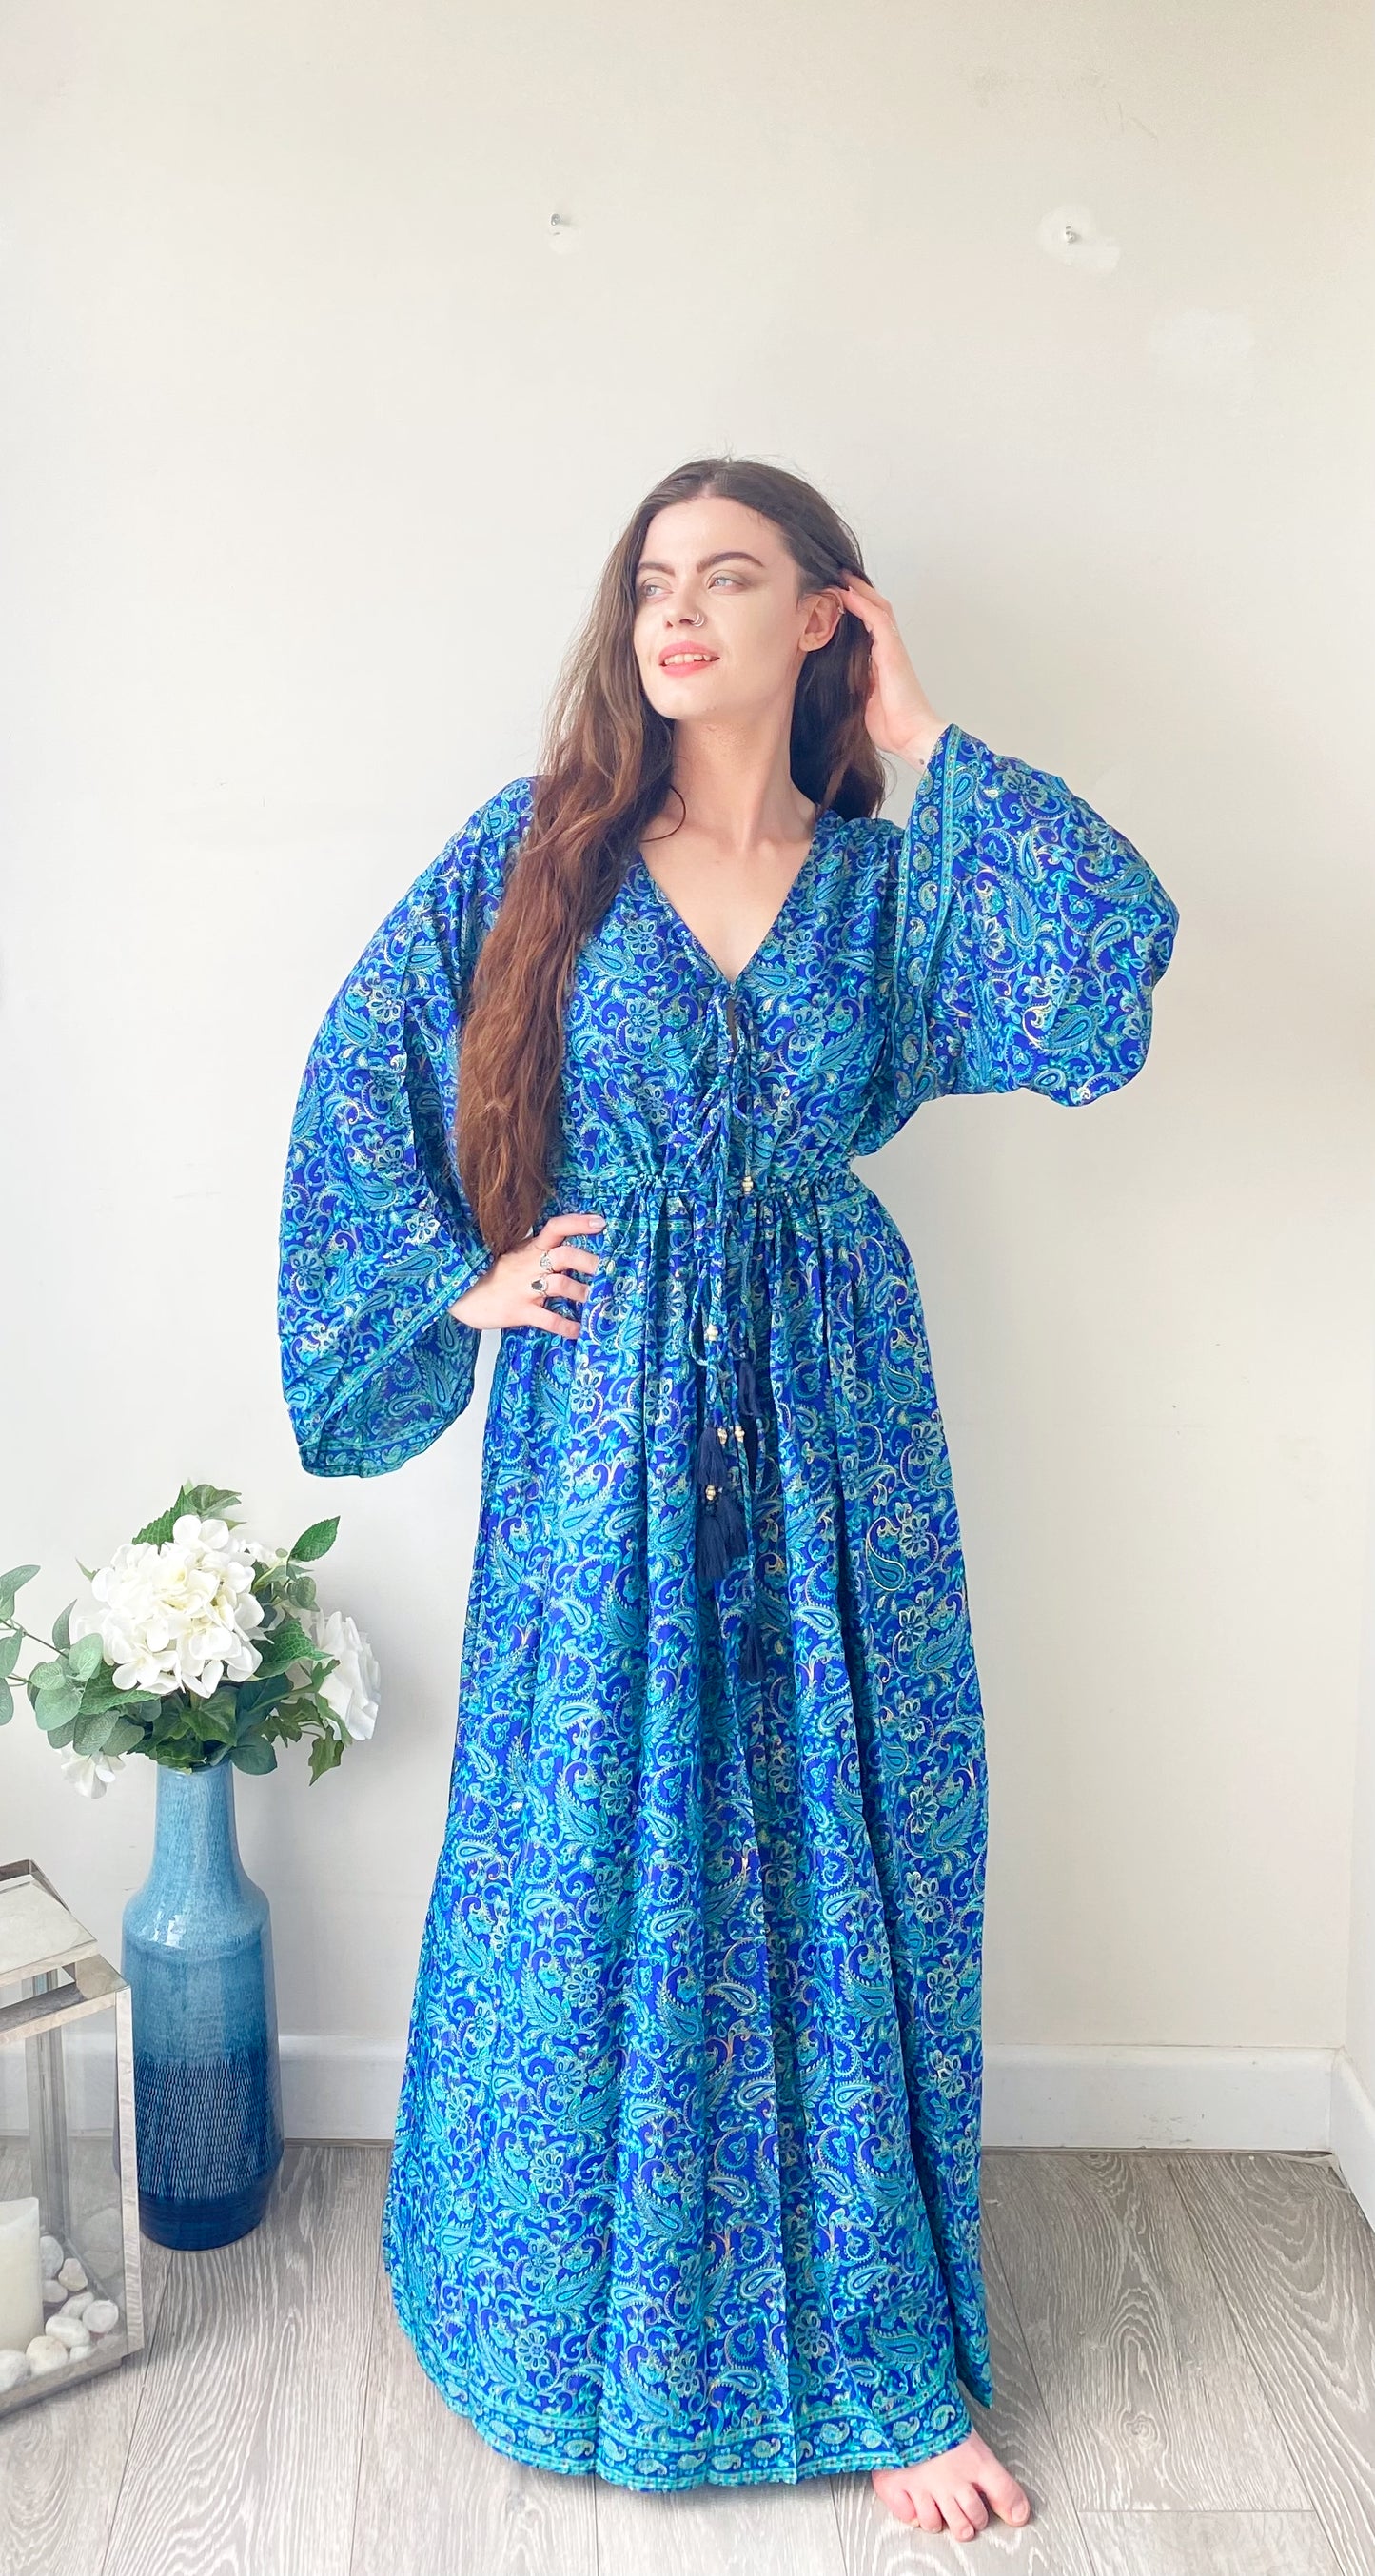 Nova royal-blue paisley-print silk maxi dress free size UK8-16